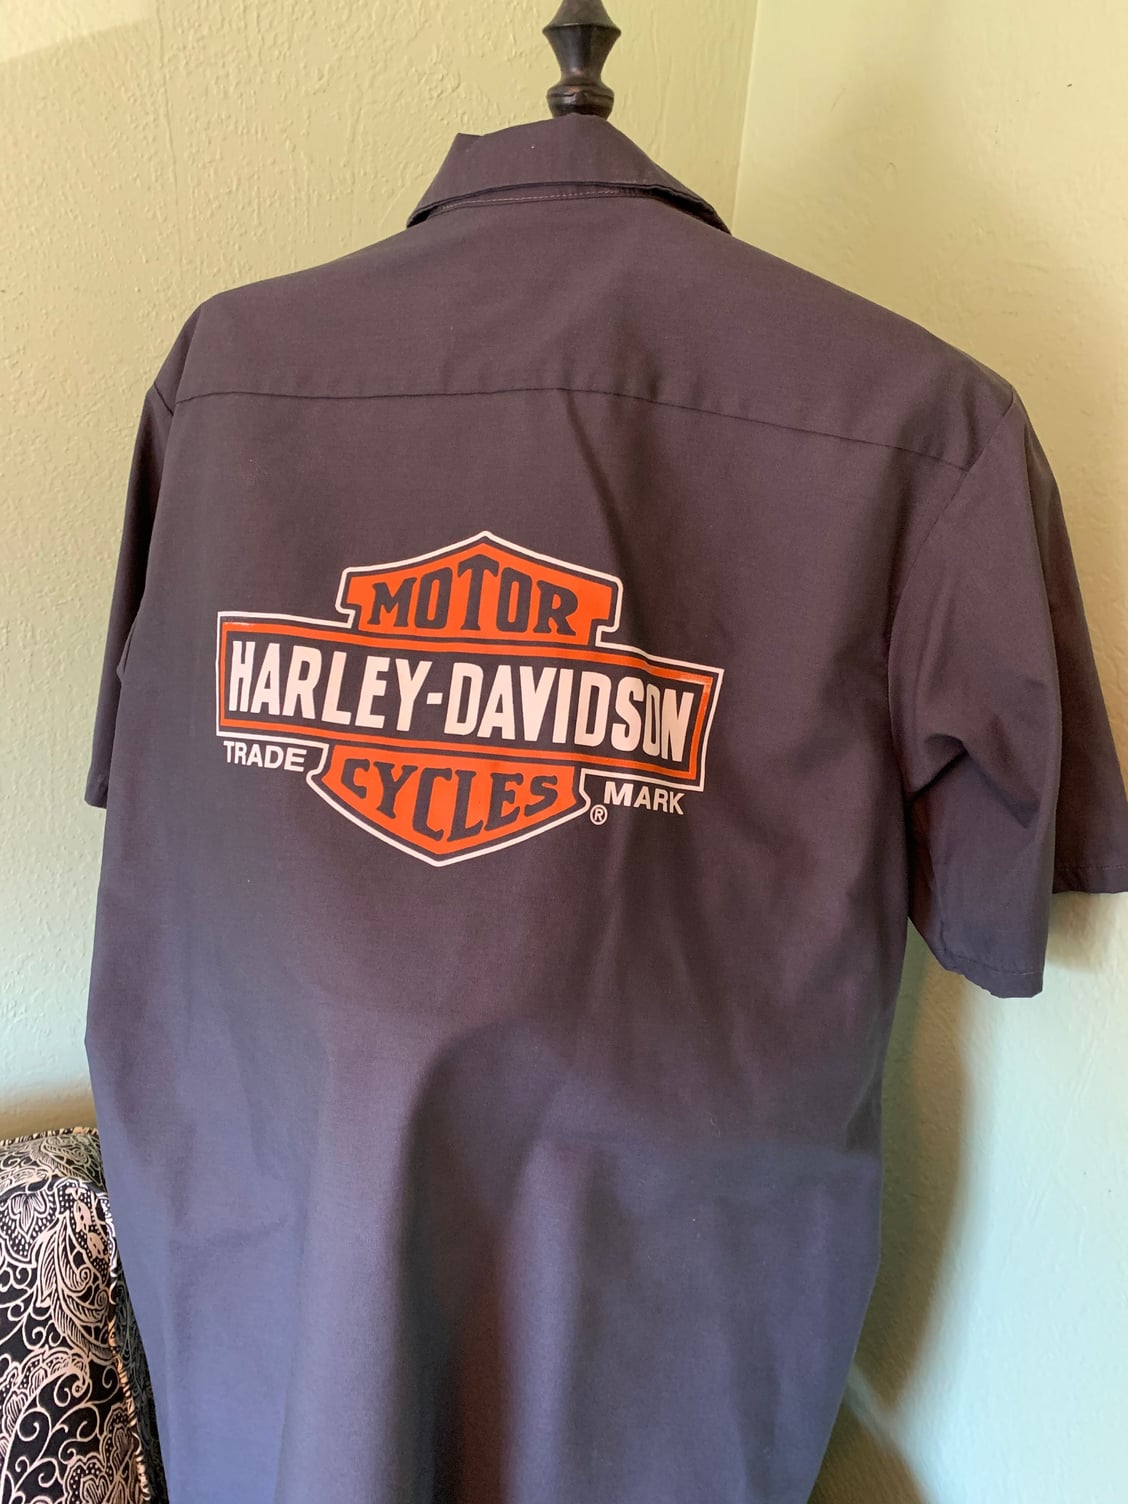 HD Shirts - Harley Davidson Forums